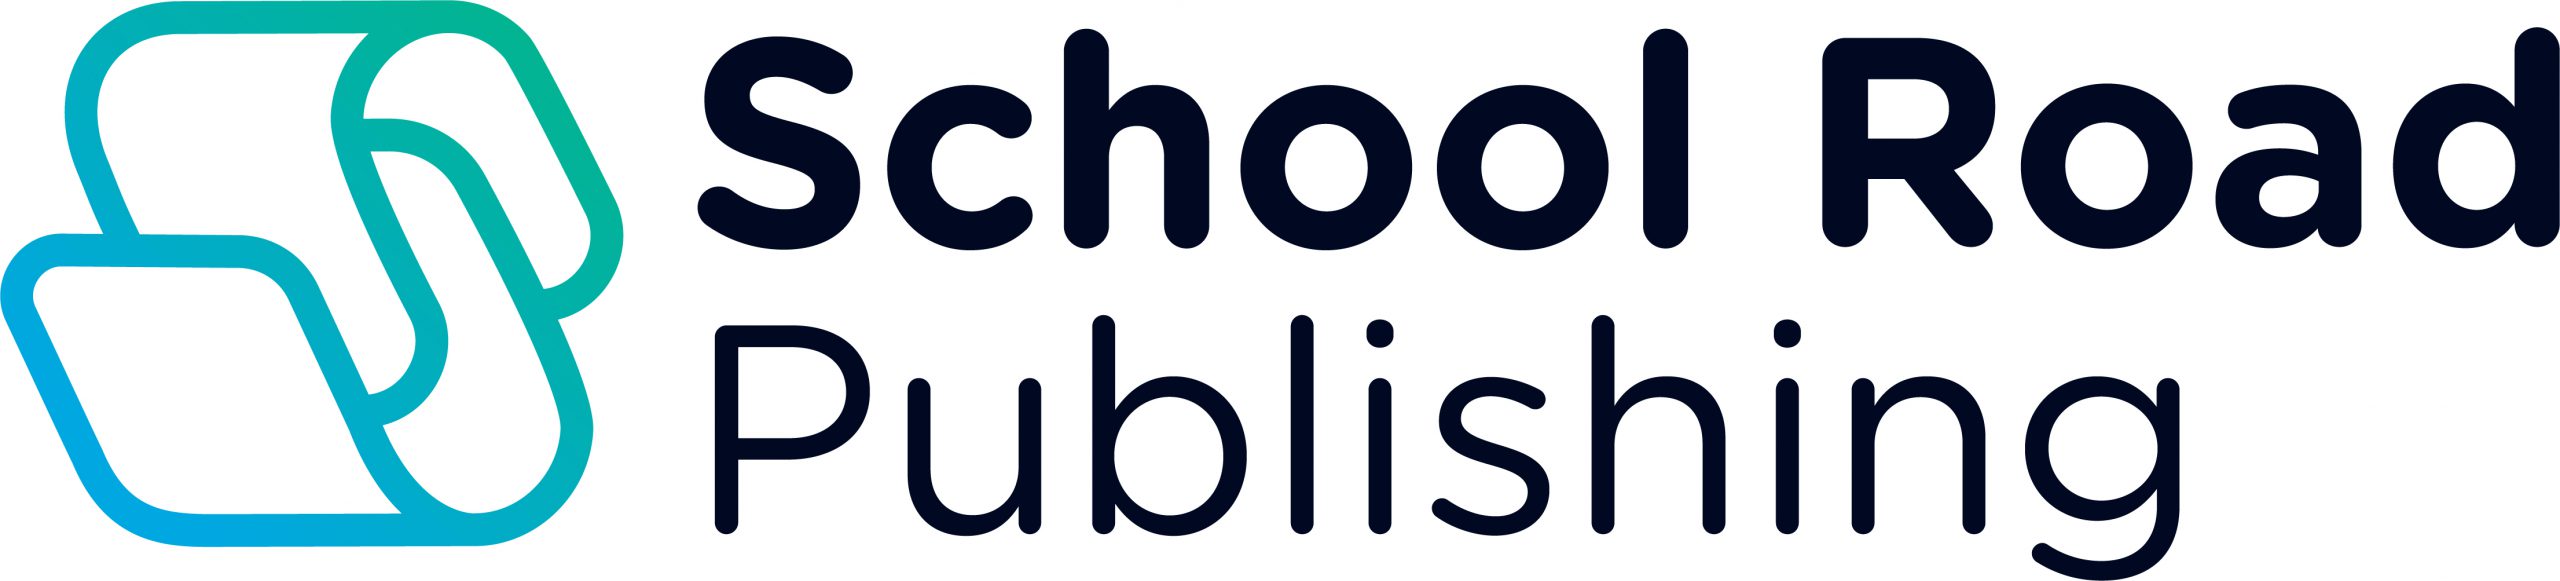 School Road Publishing Logo